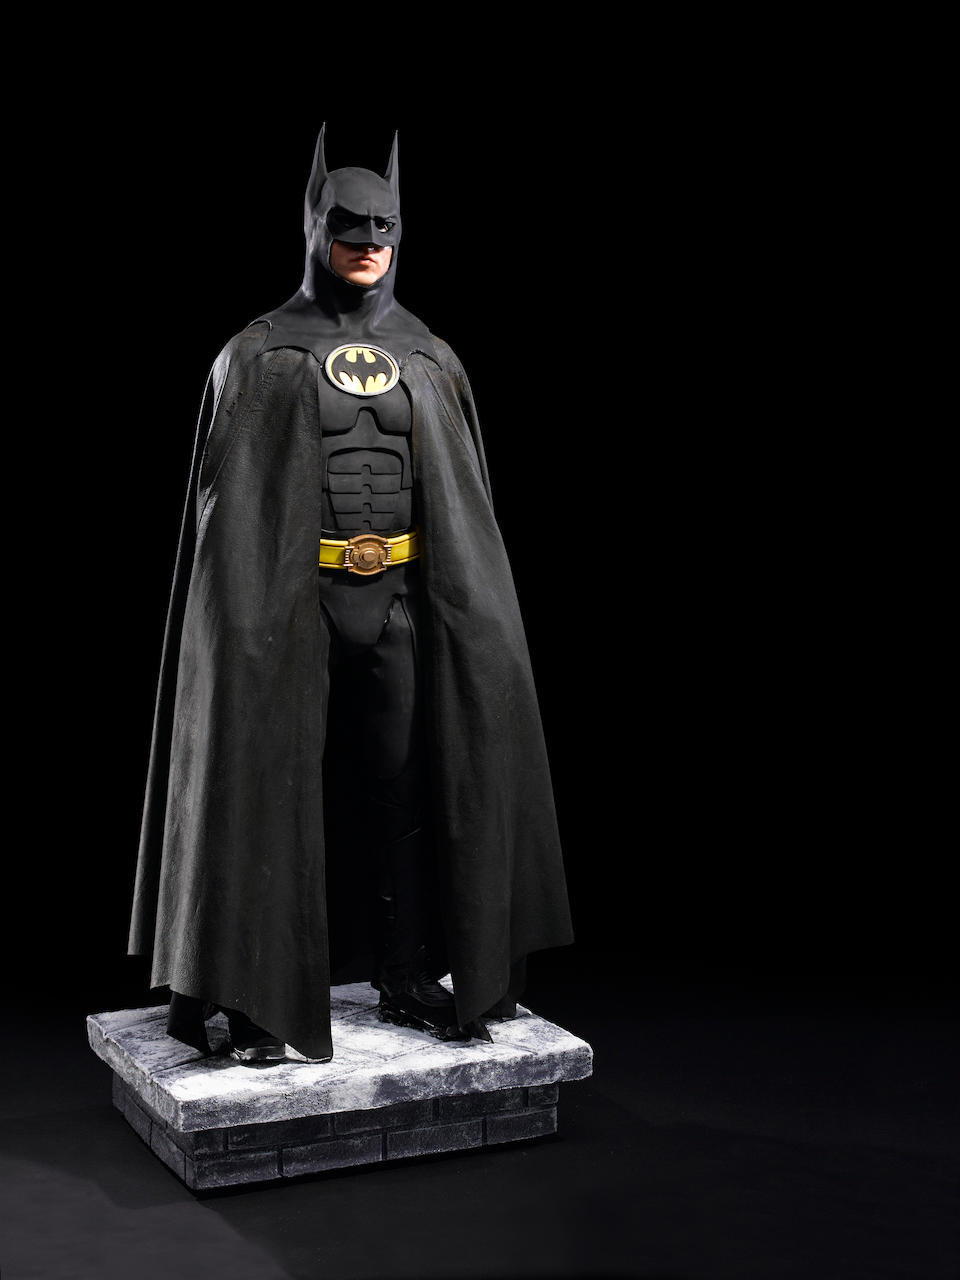 A Michael Keaton Batman costume from Batman Returns